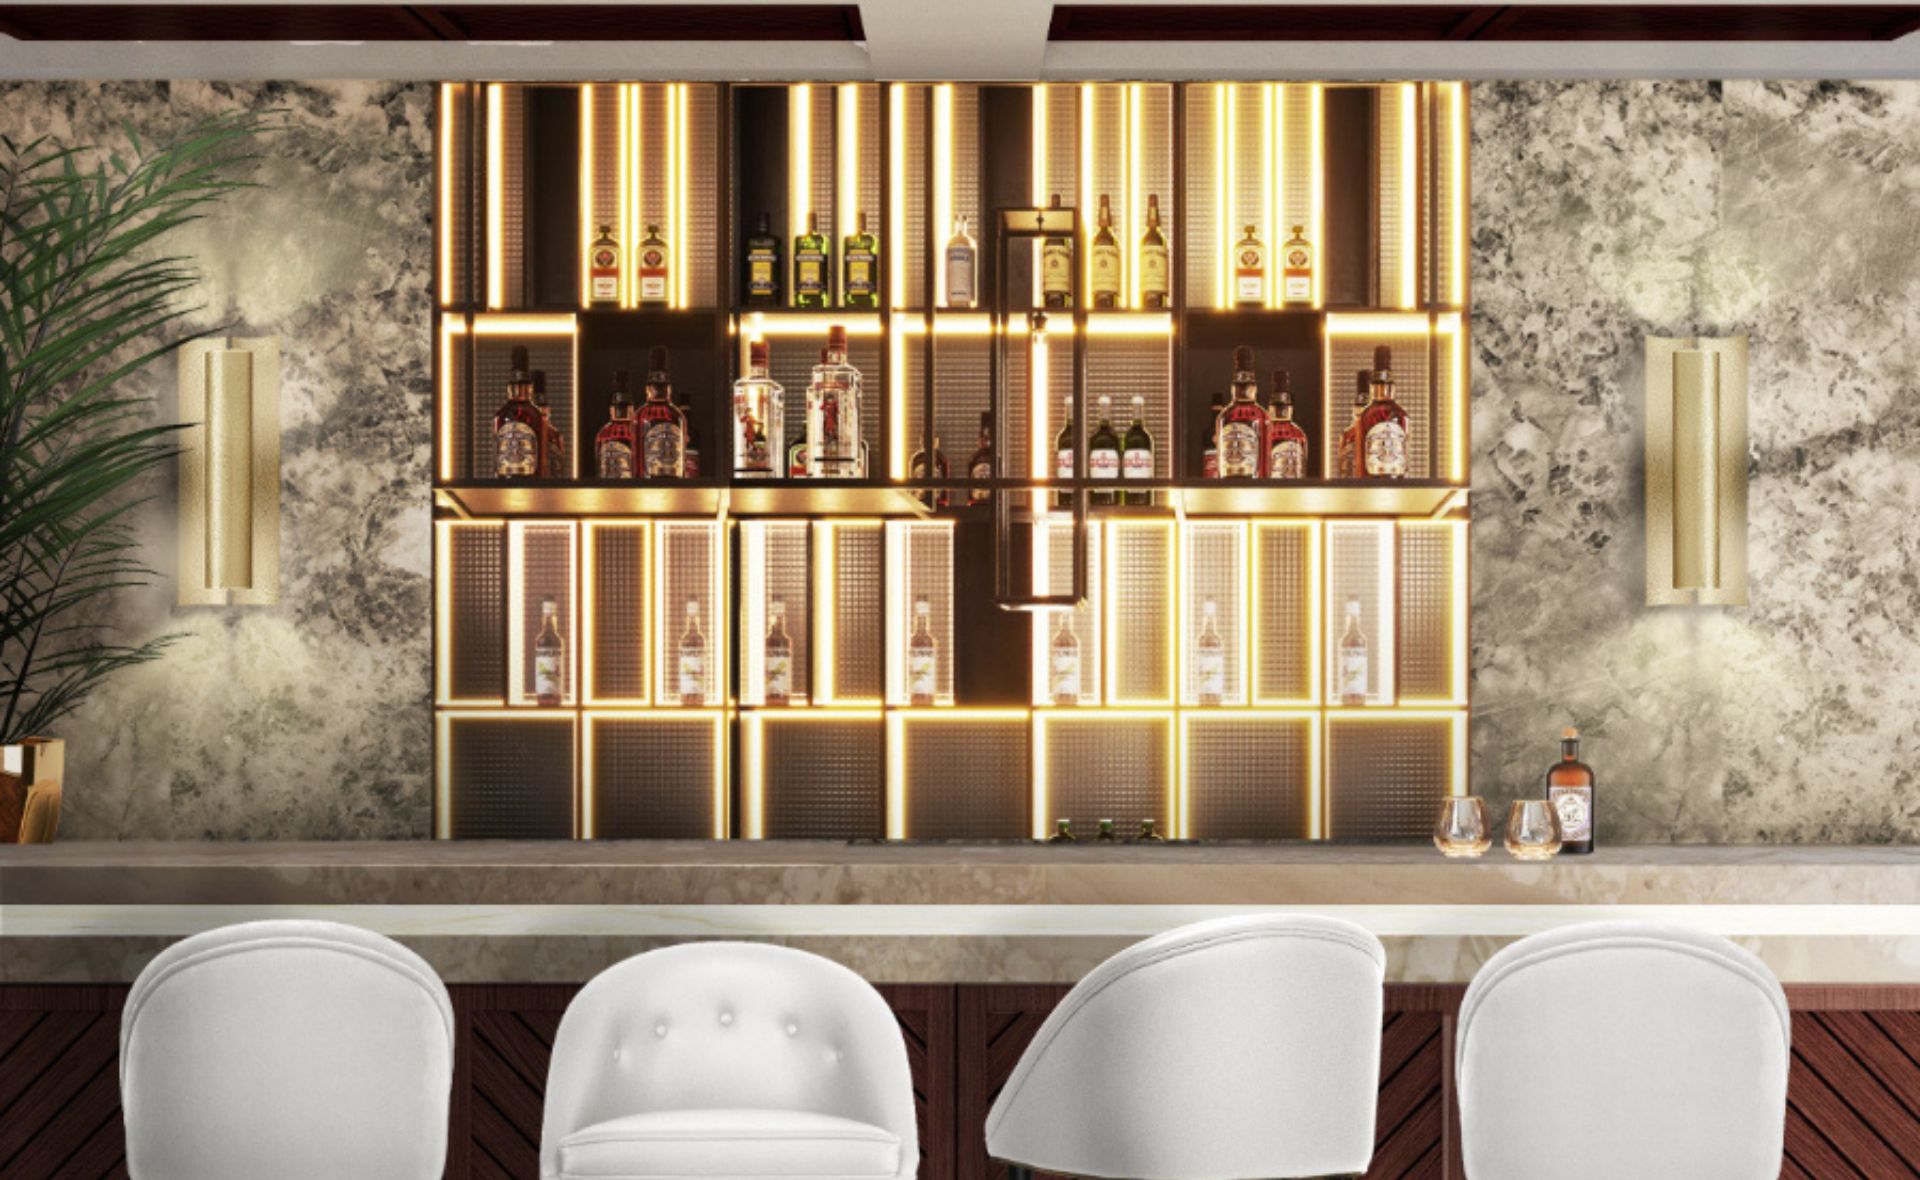 10 Best Durable Bar Chairs For A Modern Bar Decor